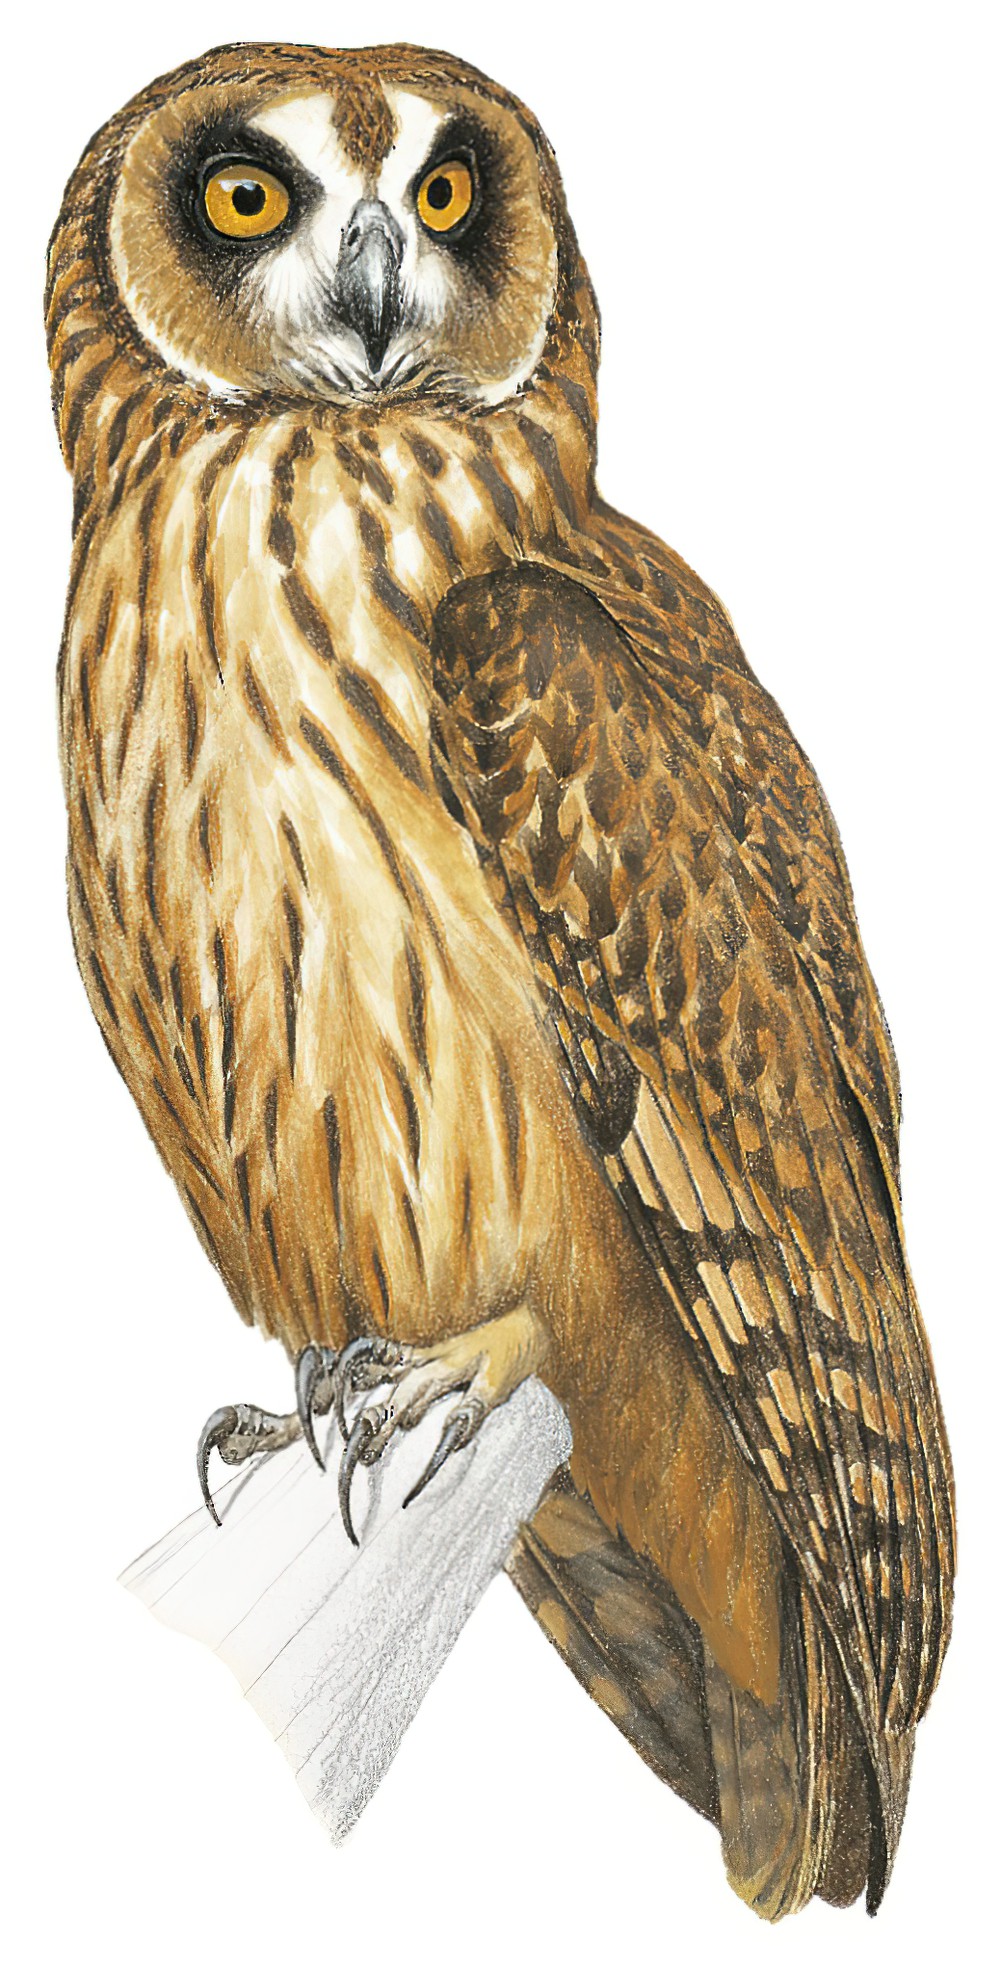 Fearful Owl / Nesasio solomonensis